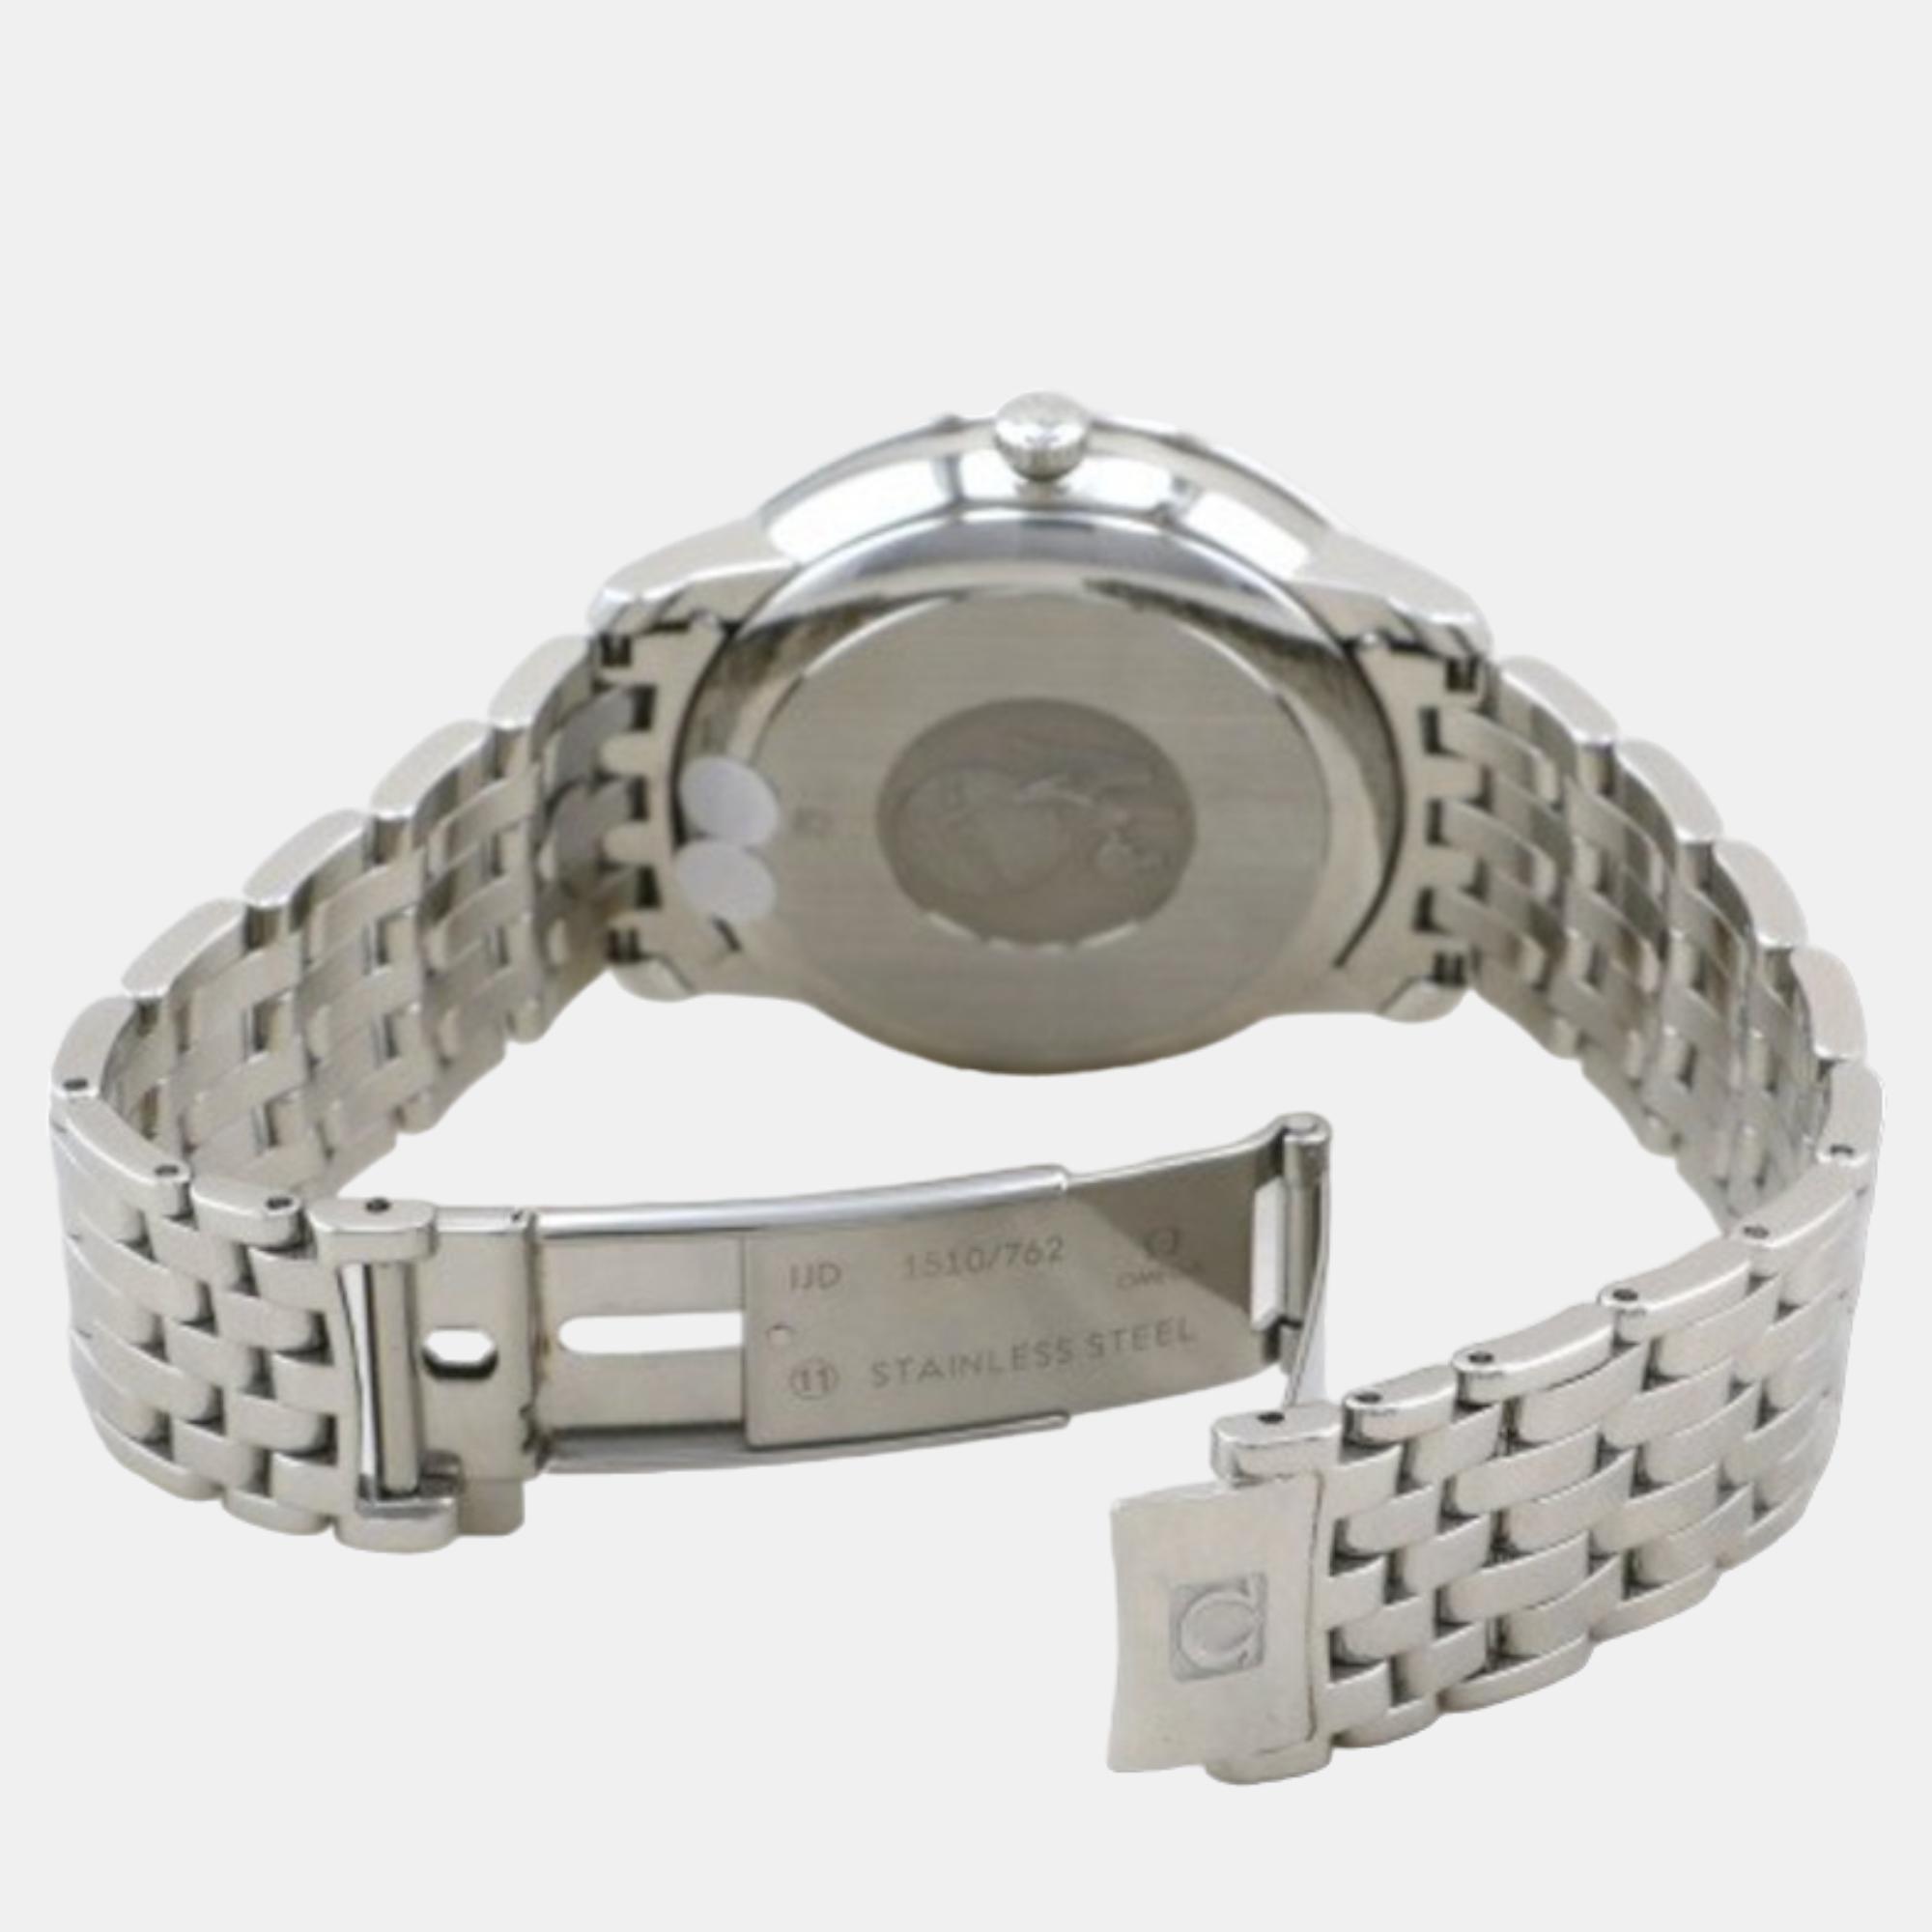 Omega Silver Stainless Steel De Ville 424.10.37.20.04.001 Automatic Women's Wristwatch 37 Mm